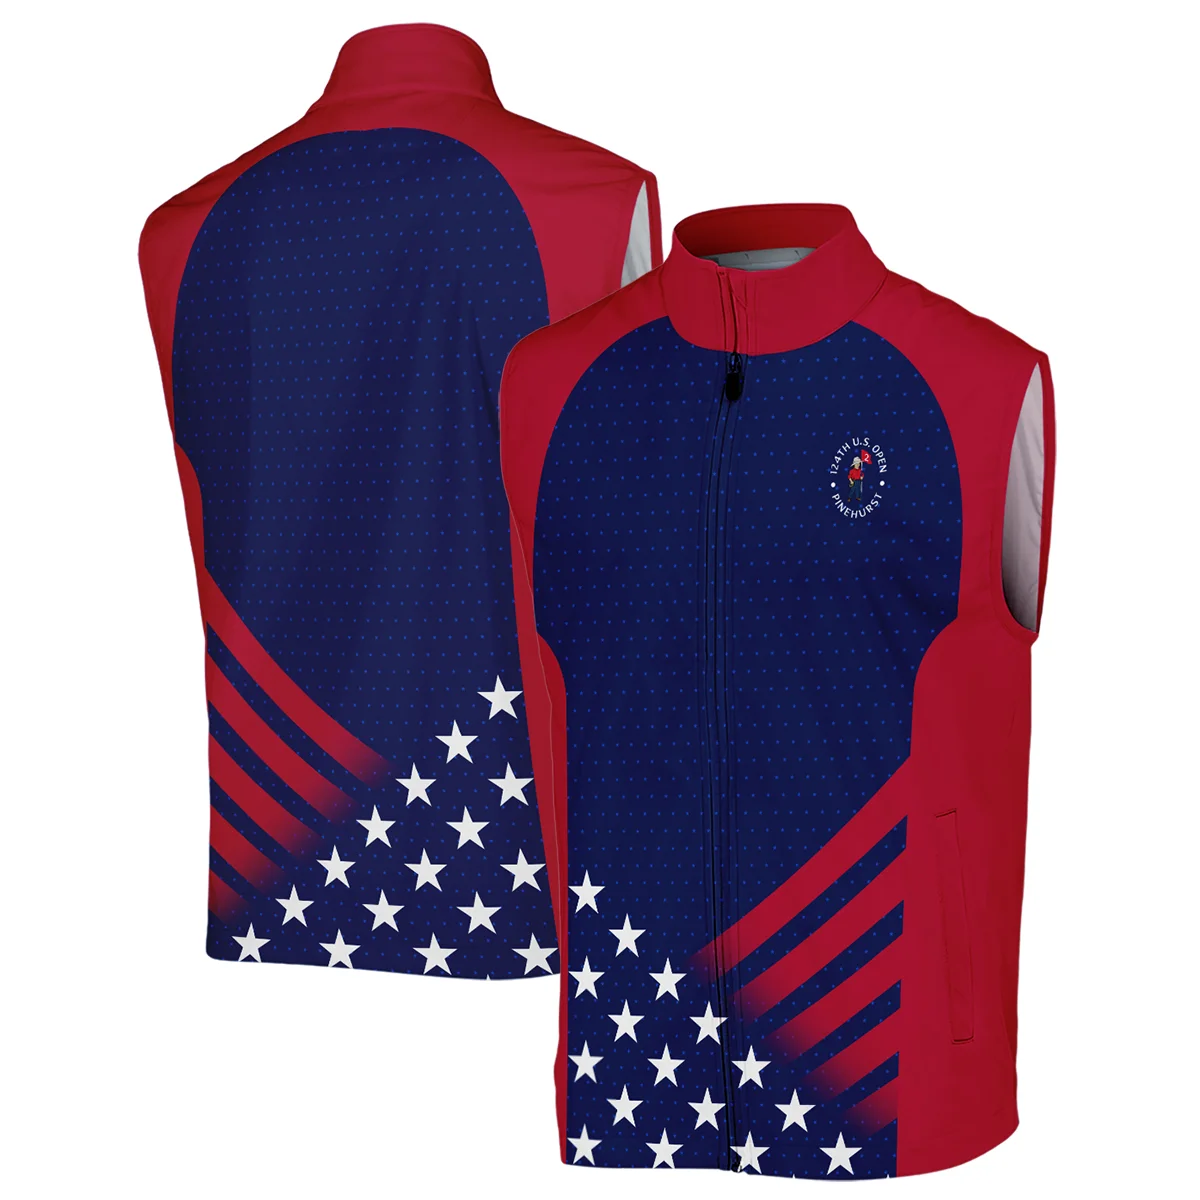 Callaway 124th U.S. Open Pinehurst Star White Dark Blue Red Background Polo Shirt Style Classic Polo Shirt For Men